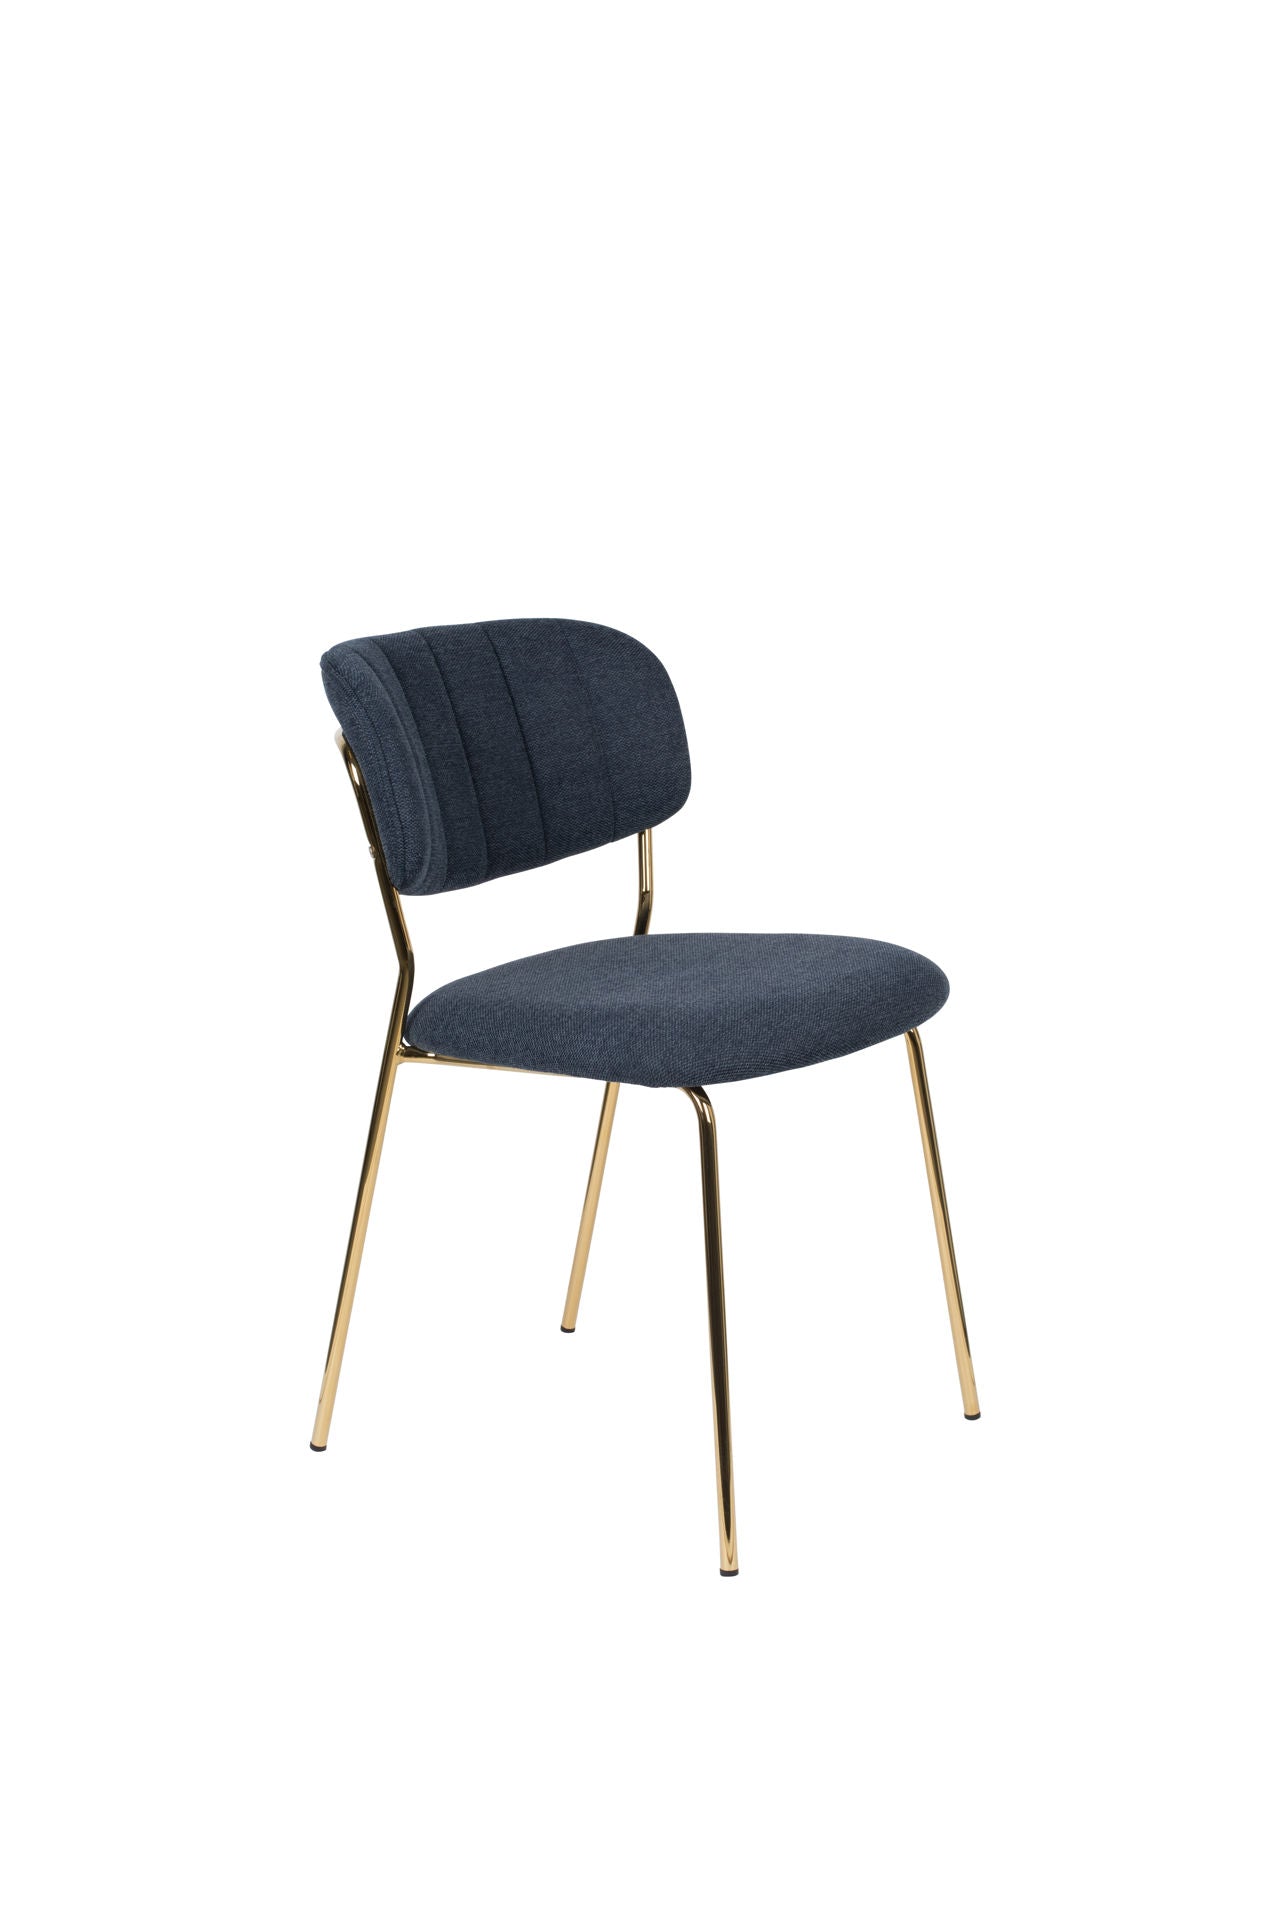 Nancy's Kings Grant Chair - Retro - Goud, Blauw - Polyester, Staal, Multiplex - 56 cm x 49 cm x 78 cm